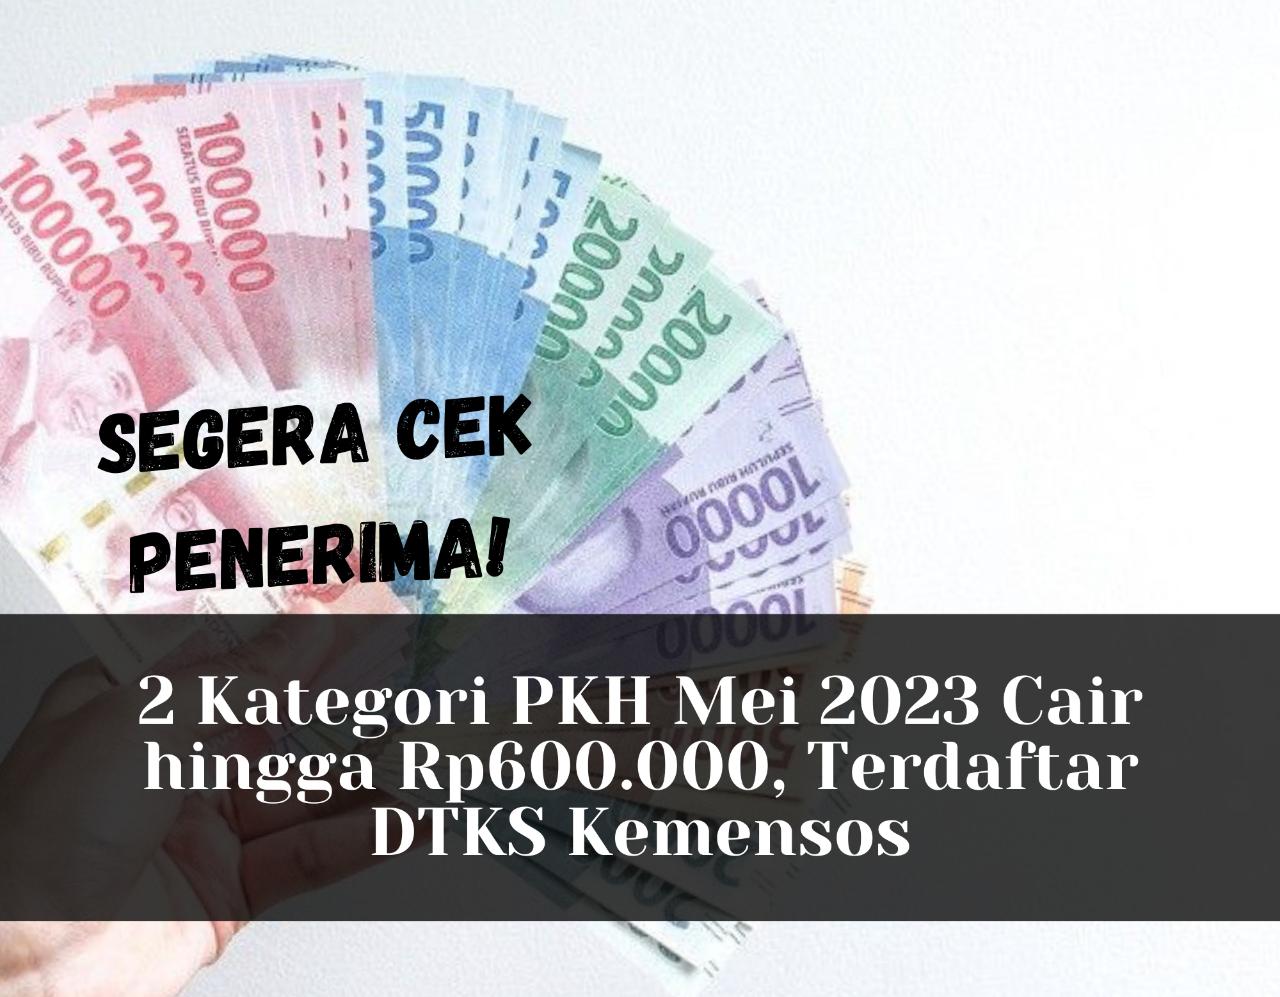 Segera Cek Penerima! 2 Kategori PKH Mei 2023 Cair hingga Rp600.000, Terdaftar DTKS Kemensos